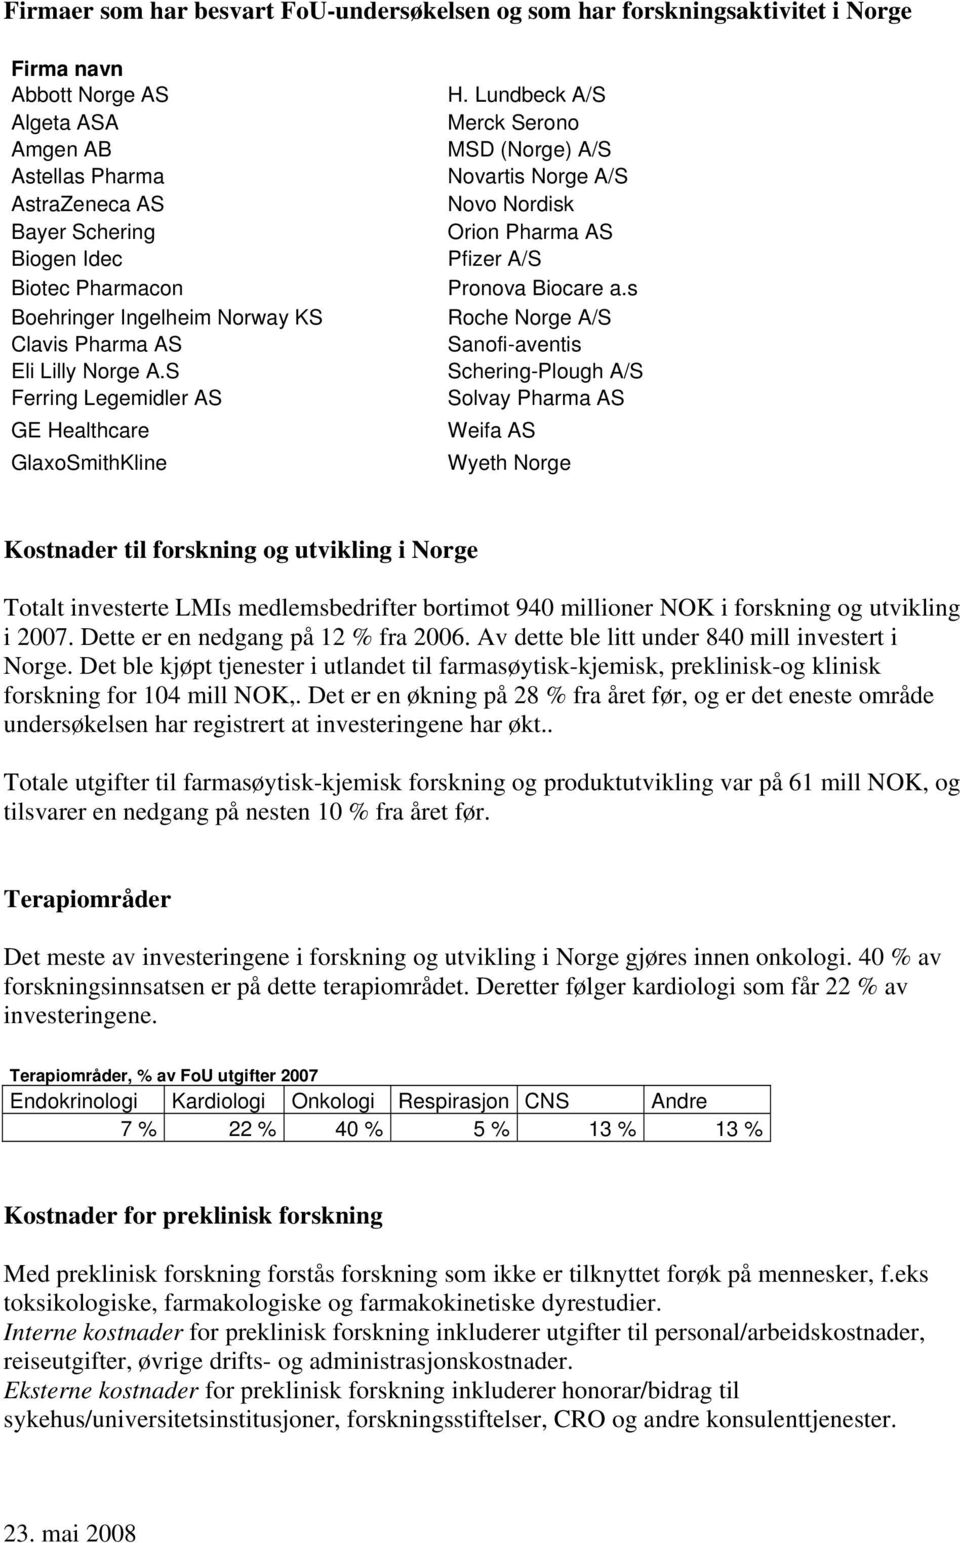 Lundbeck A/S Merck Serono MSD (Norge) A/S Novartis Norge A/S Novo Nordisk Orion Pharma AS Pfizer A/S Pronova Biocare a.